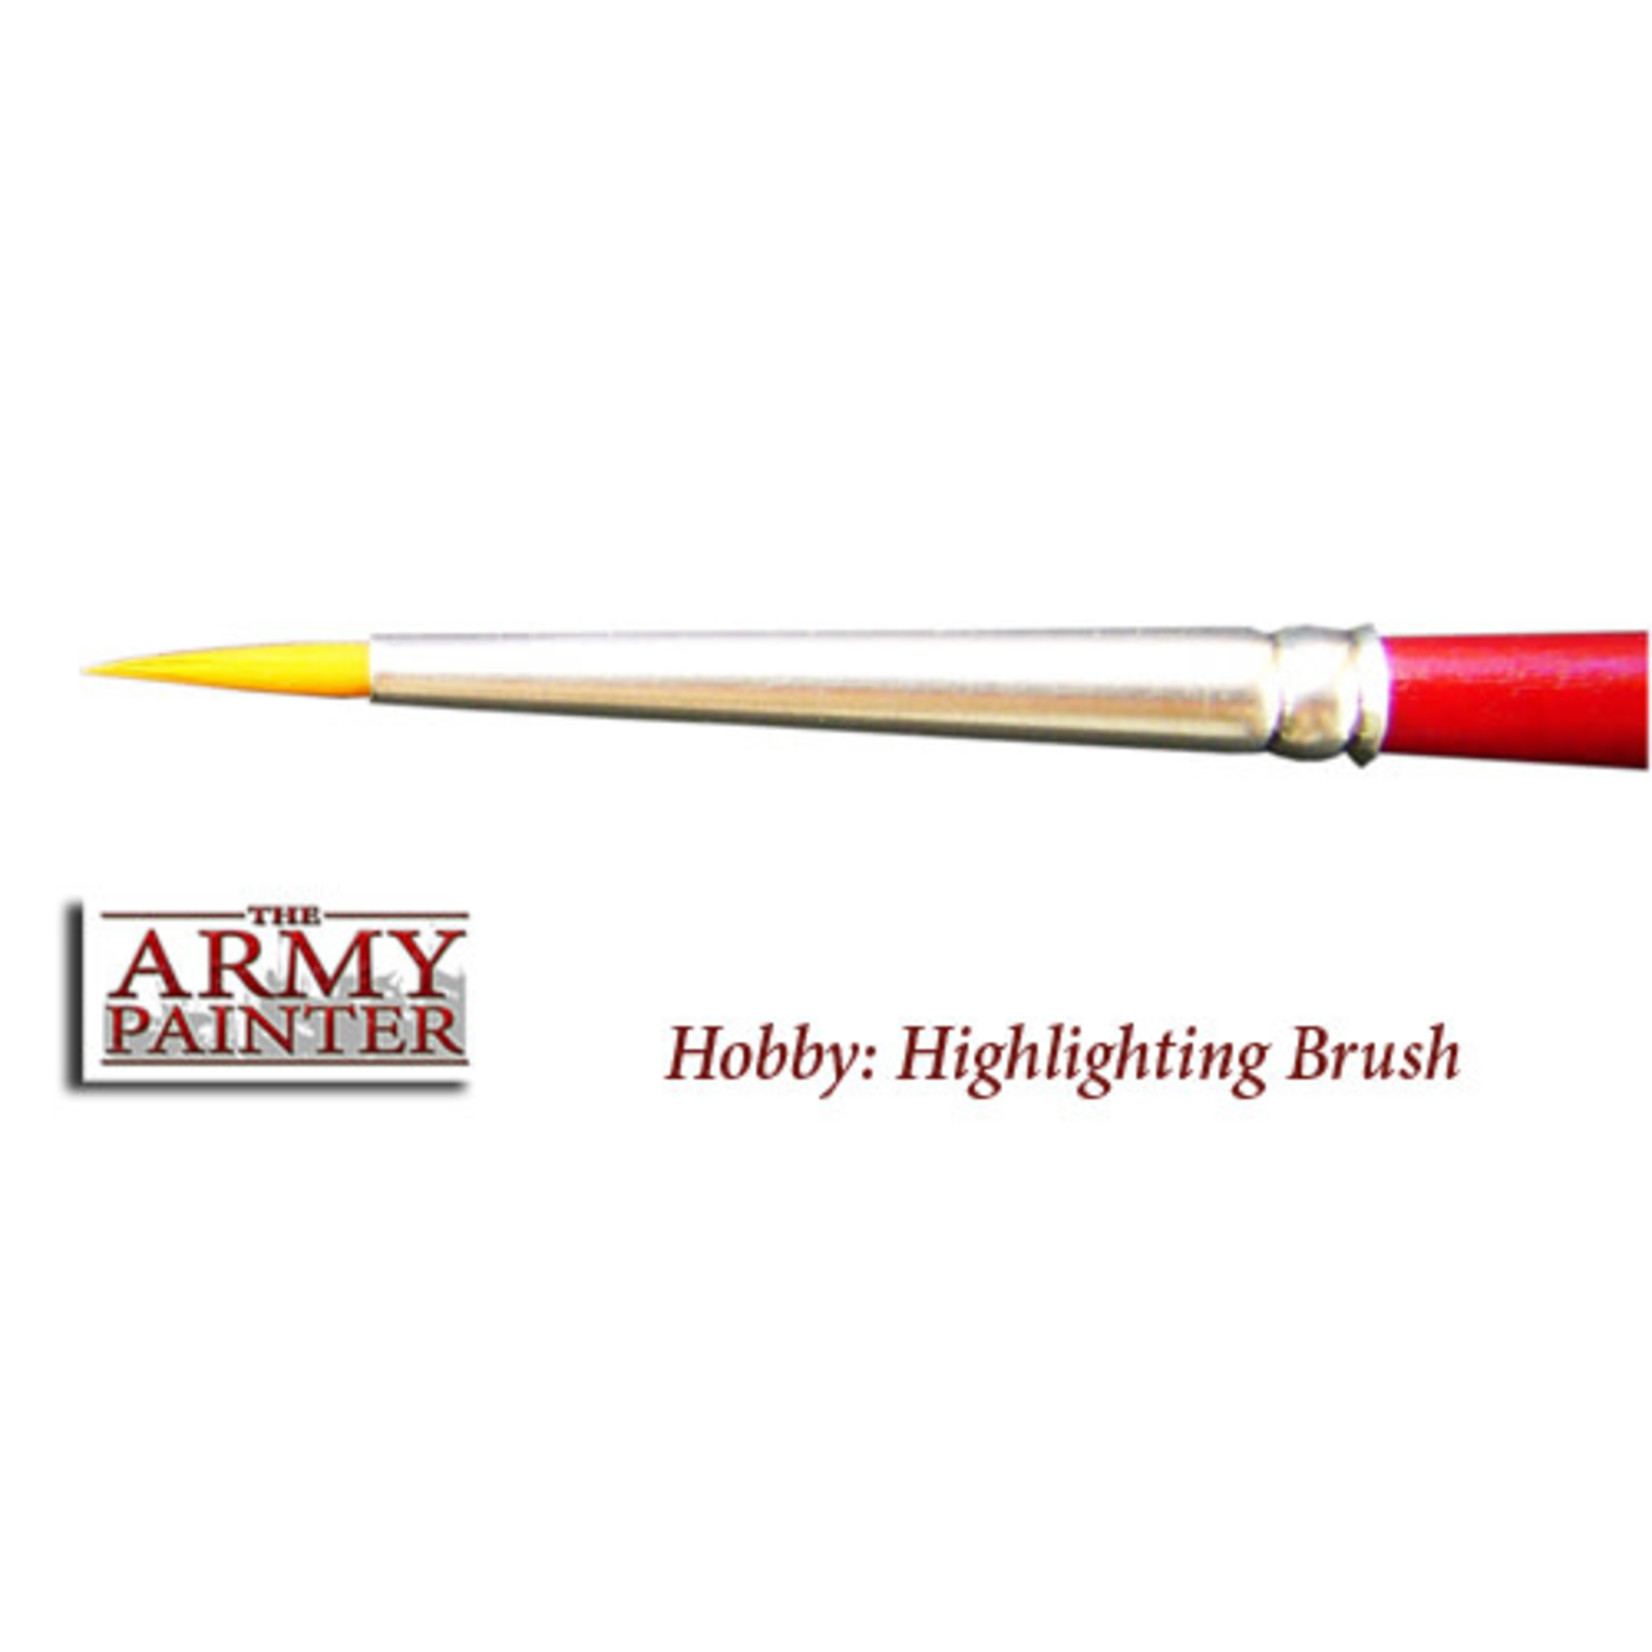 The Army Painter 7002 Hobby Brush Highlighting